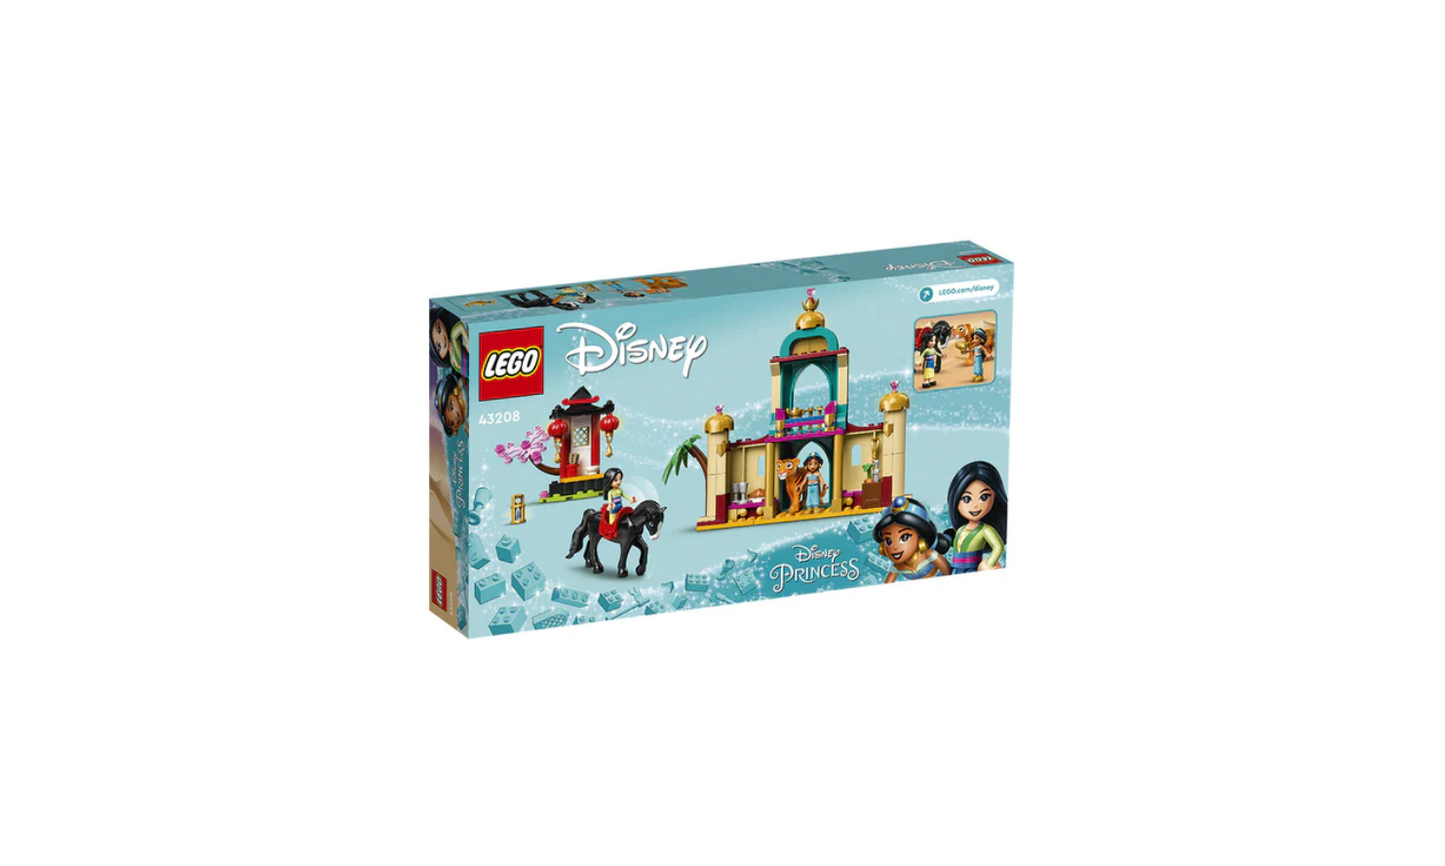 LEGO Disney Aladdin's Jasmine and Mulan  43208 - 5 años a mas.